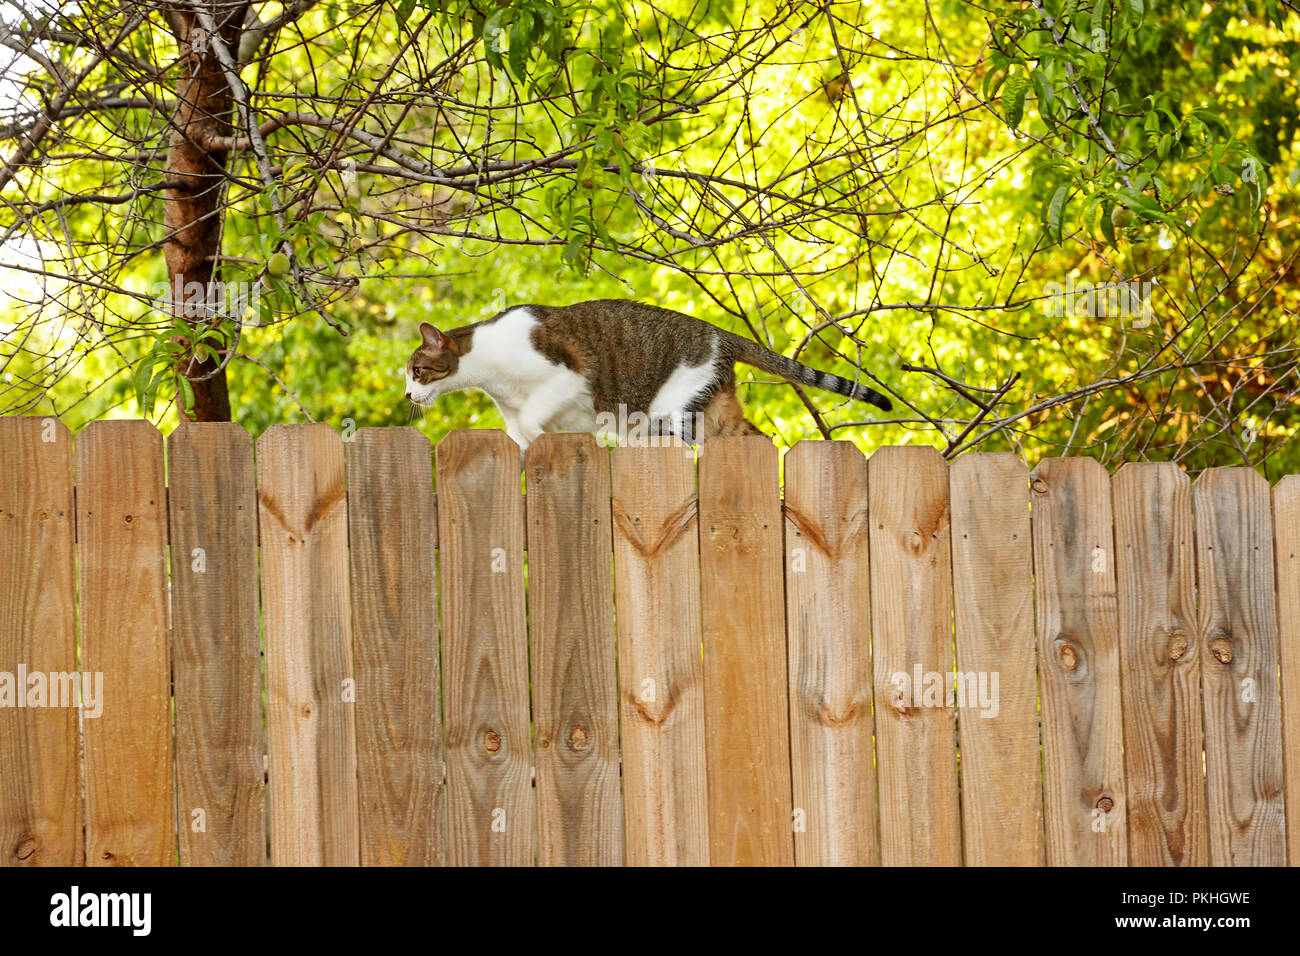 Cat on wood fence Stock Photo